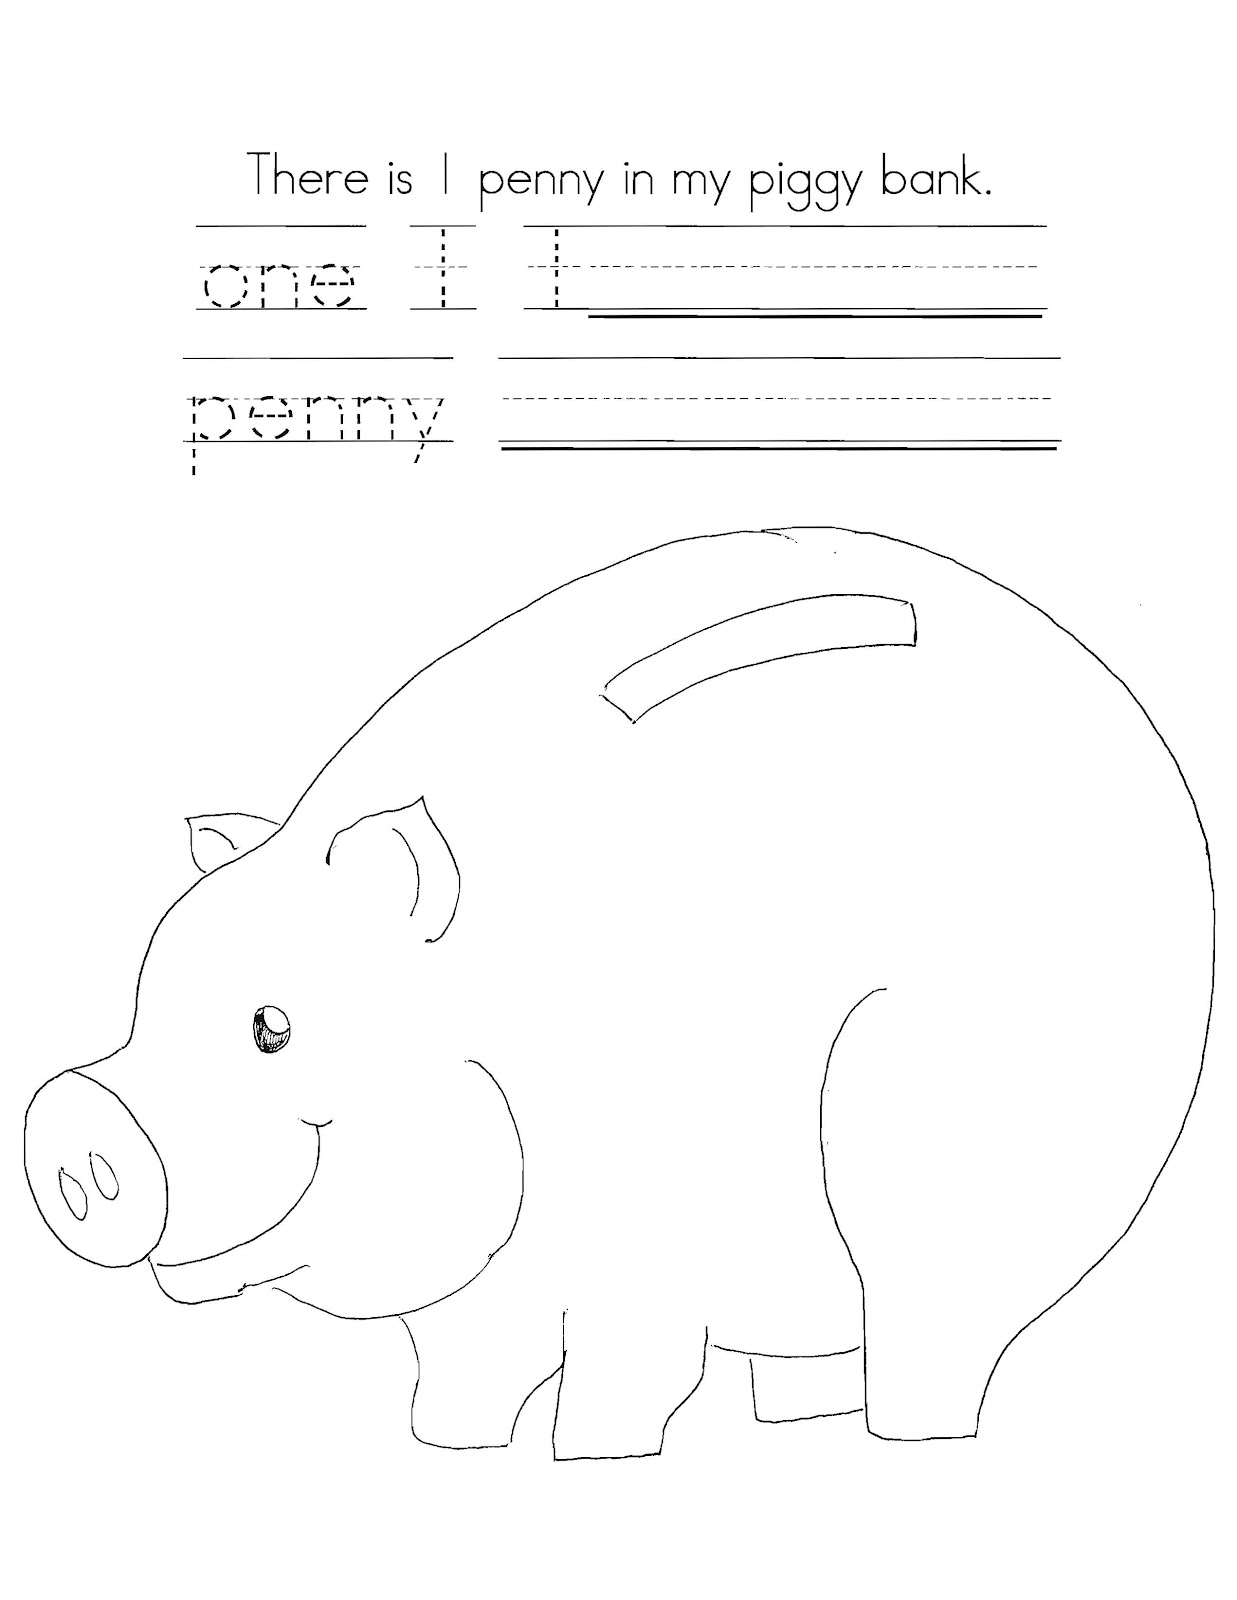 Classroom Freebies: My Piggy Bank